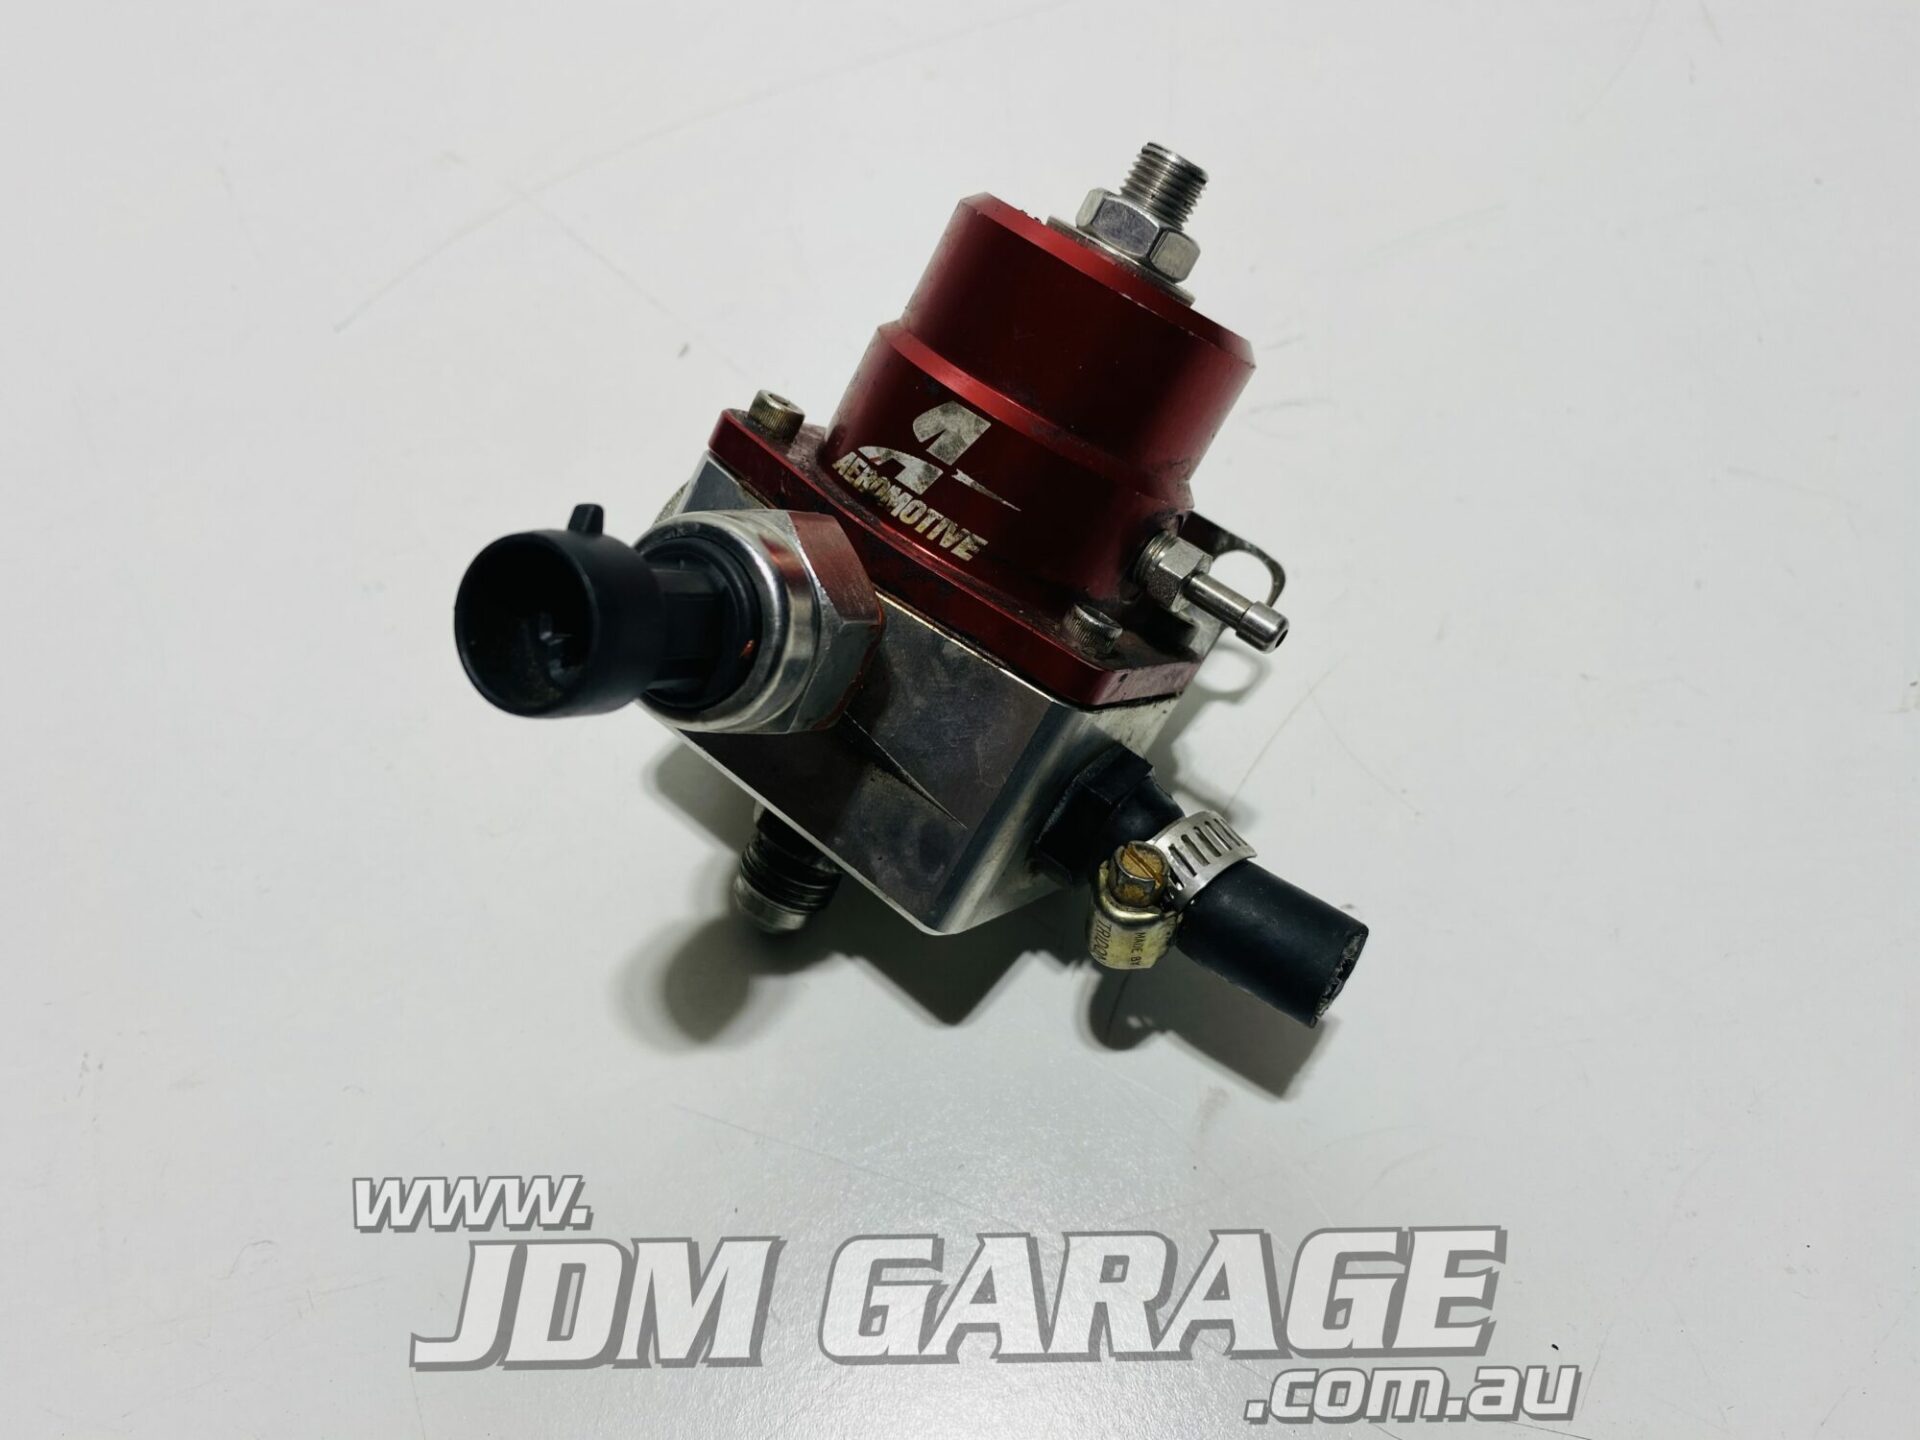 Turbosmart FPR800 Fuel Pressure Regulator with Gauge - JDM Garage Australia